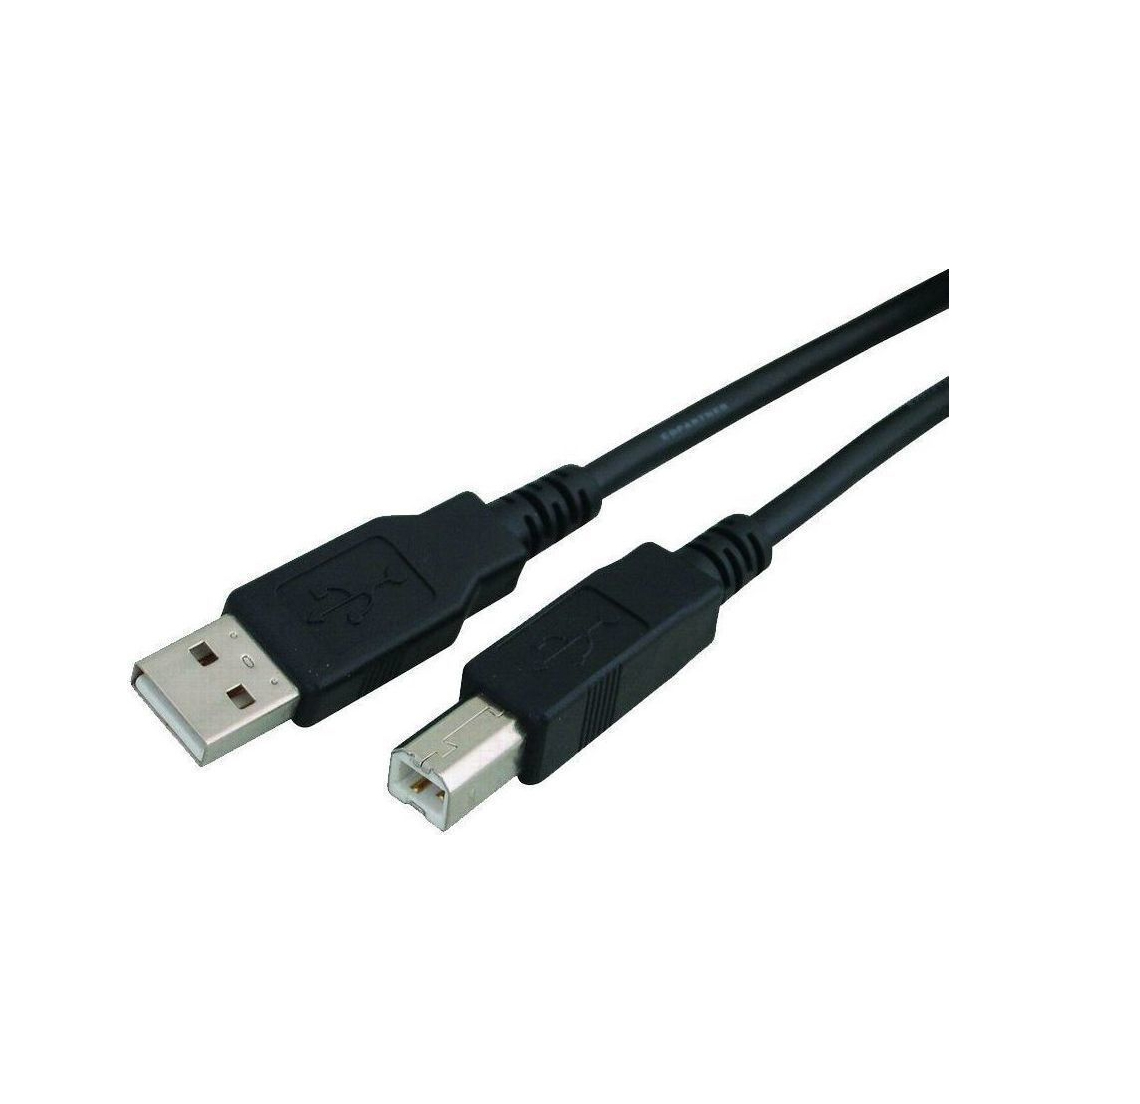 POWERTECH Καλώδιο USB 2.0 σε USB Type B CAB-U016, 1.5m, μαύρο - POWERTECH 5810